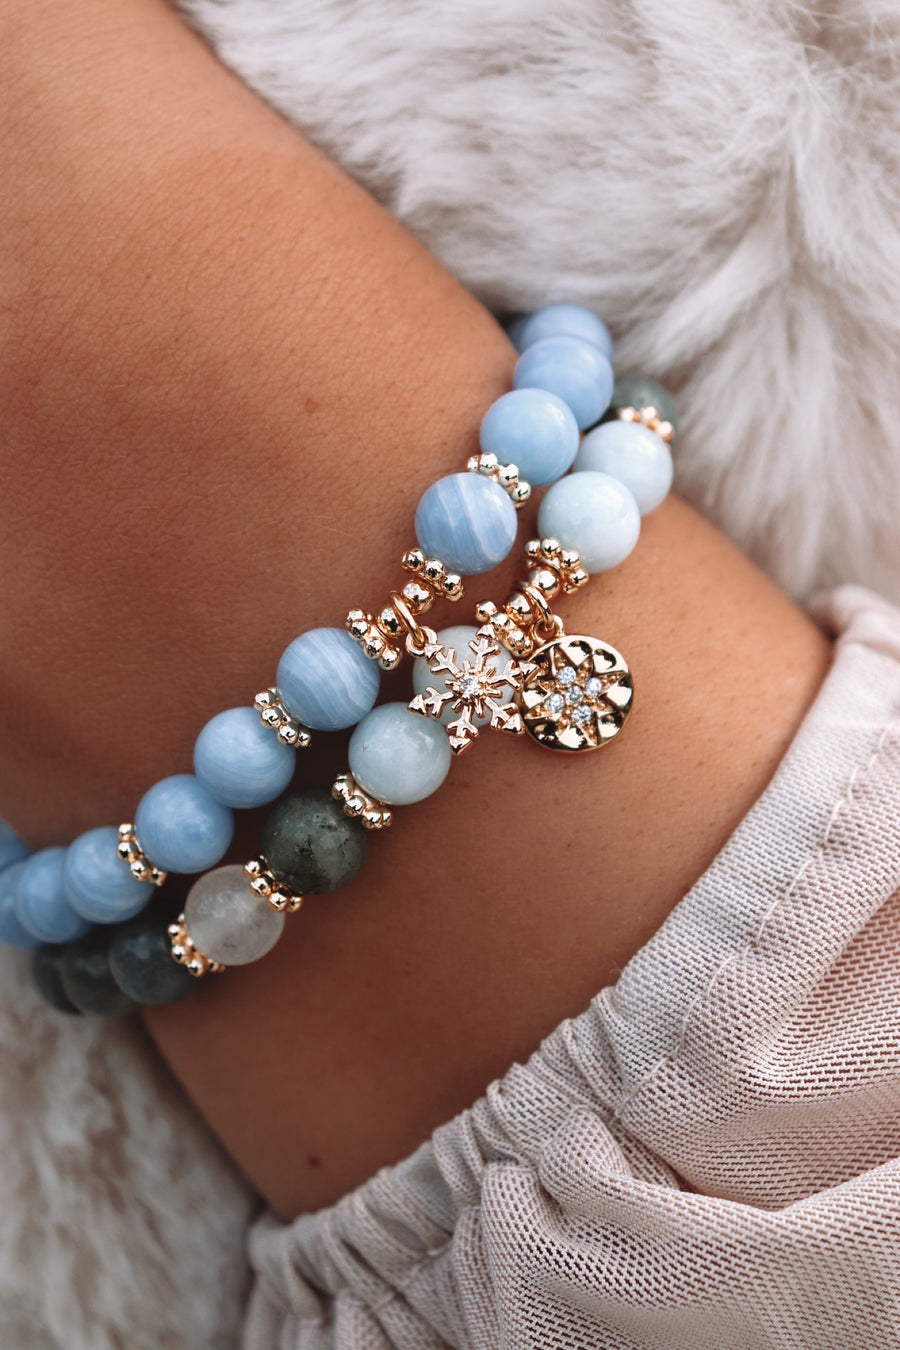 I am in harmonious flow | aquamarine + labradorite mala bracelet